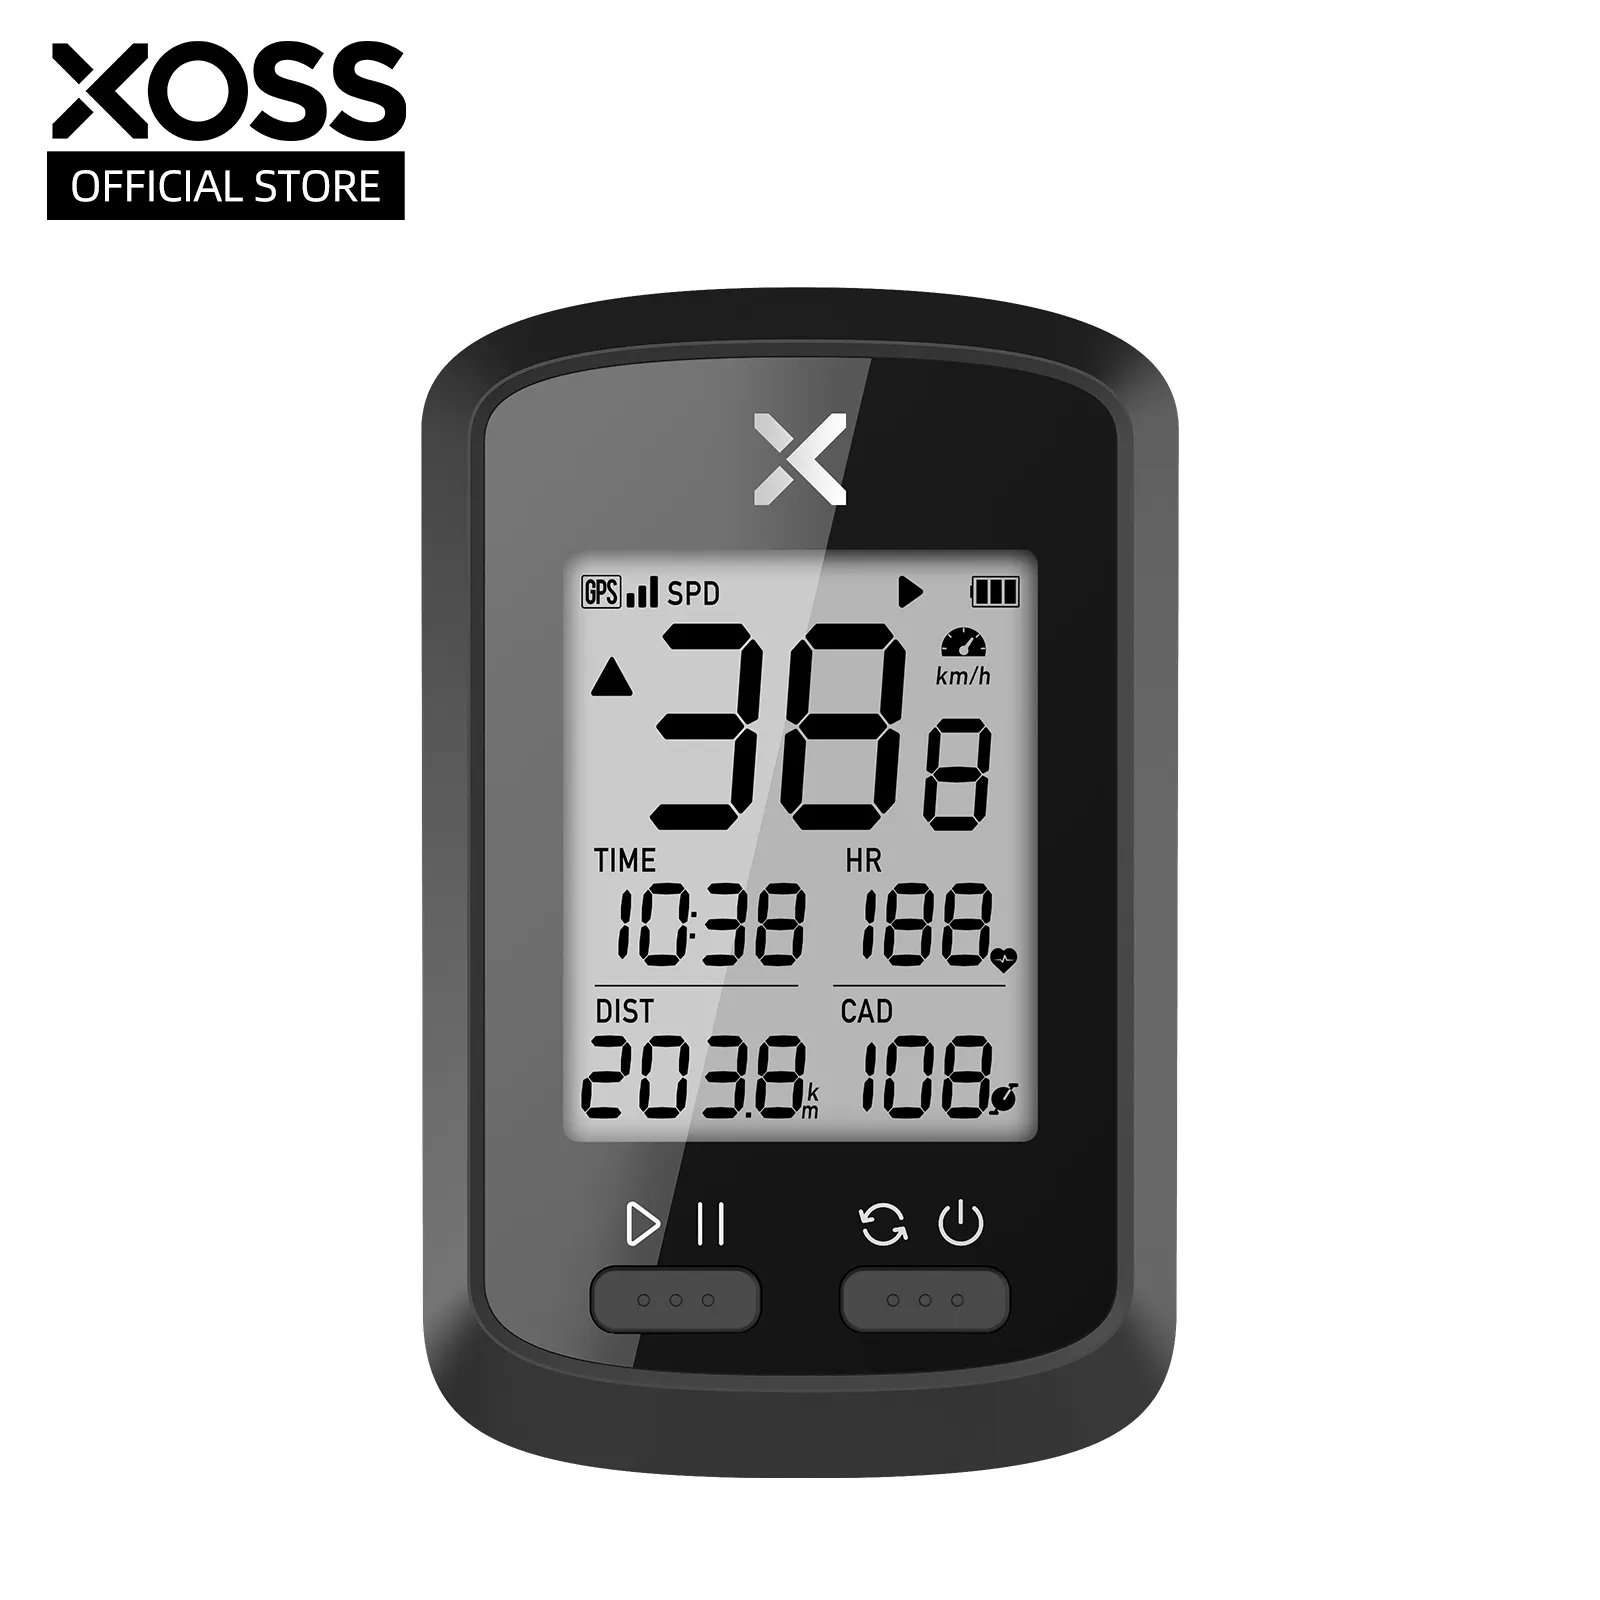 XOSS G+ wireless GPS Road bike lcd digital cateye speedometer cycle odometer bicycle computer for mtb bike cycle